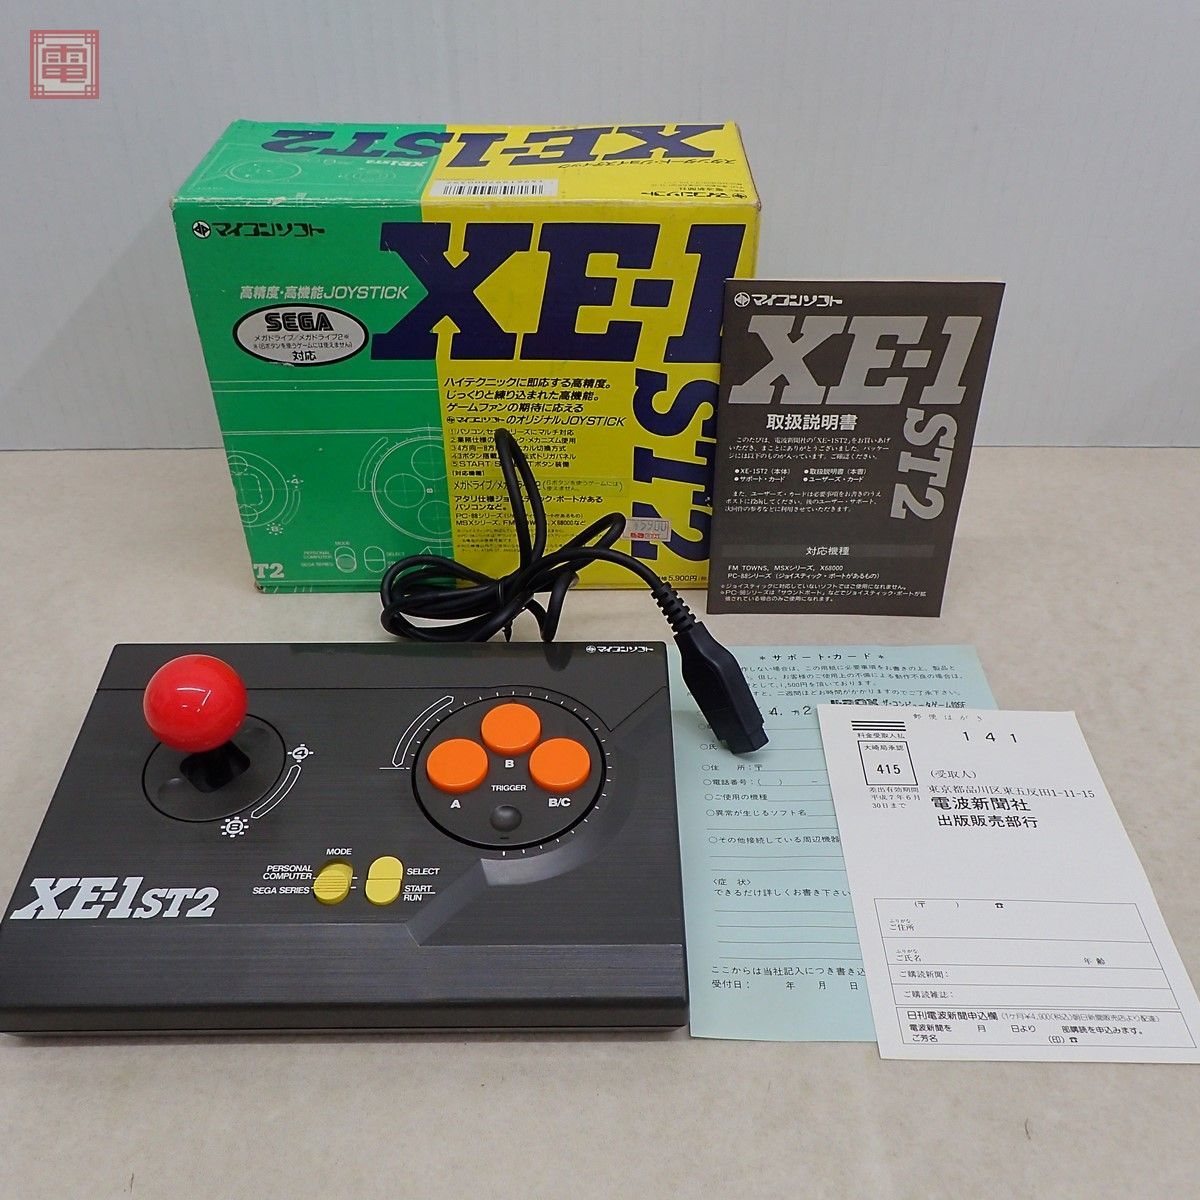 X68000/MSX/SEGAシリーズ等 ジョイスティック XE-1ST2 電波新聞社